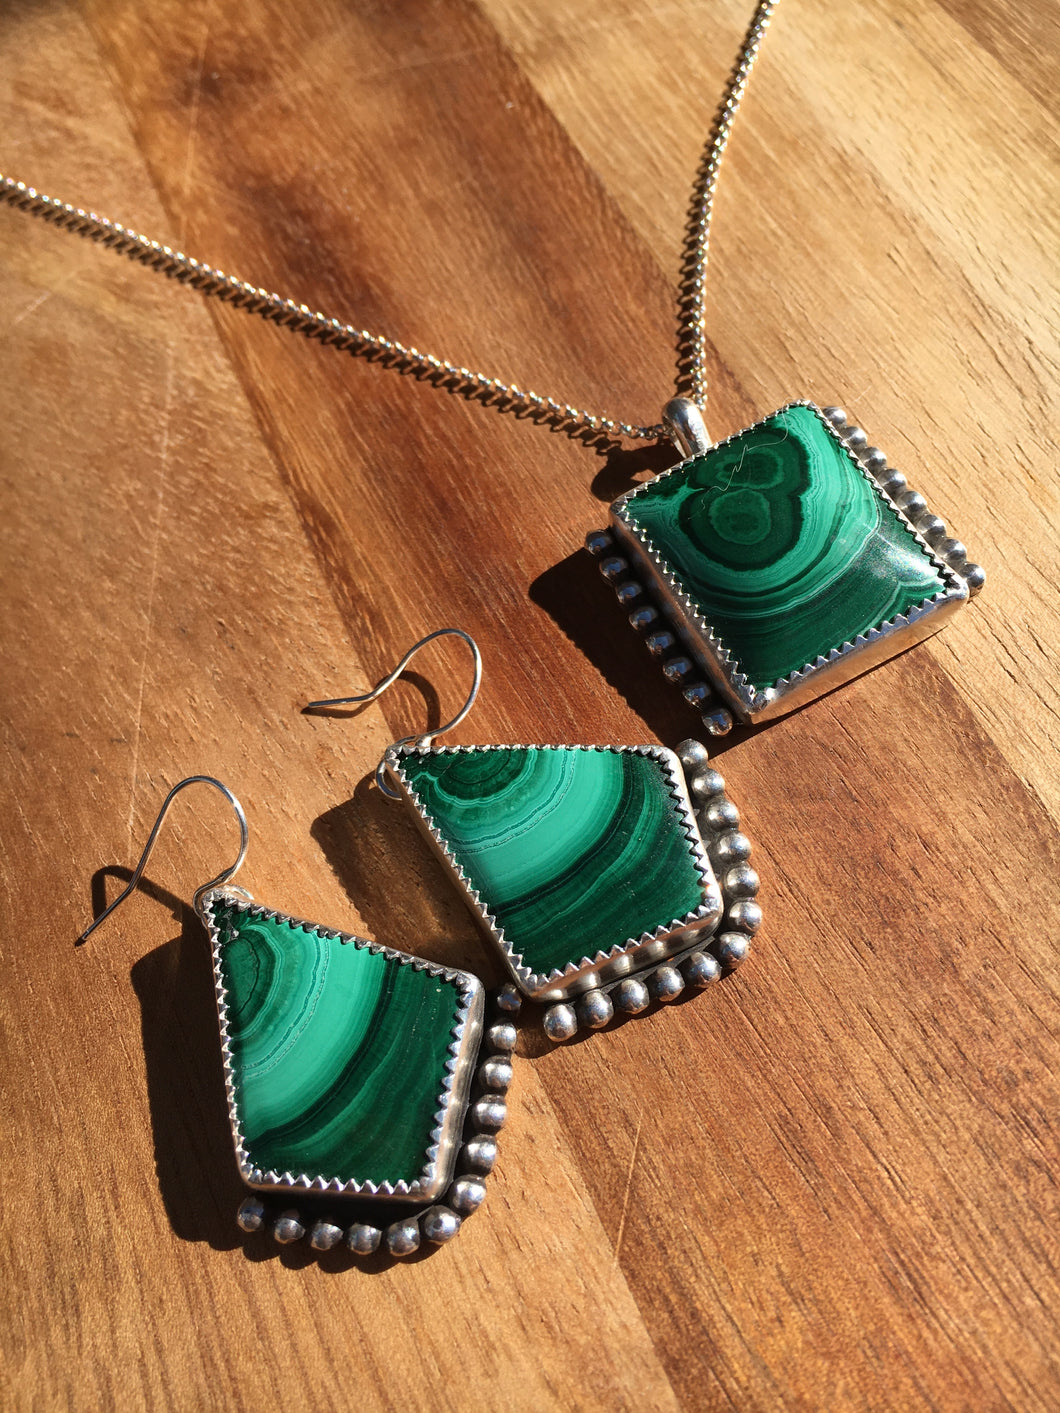 Swirly green malachite earring/necklace set